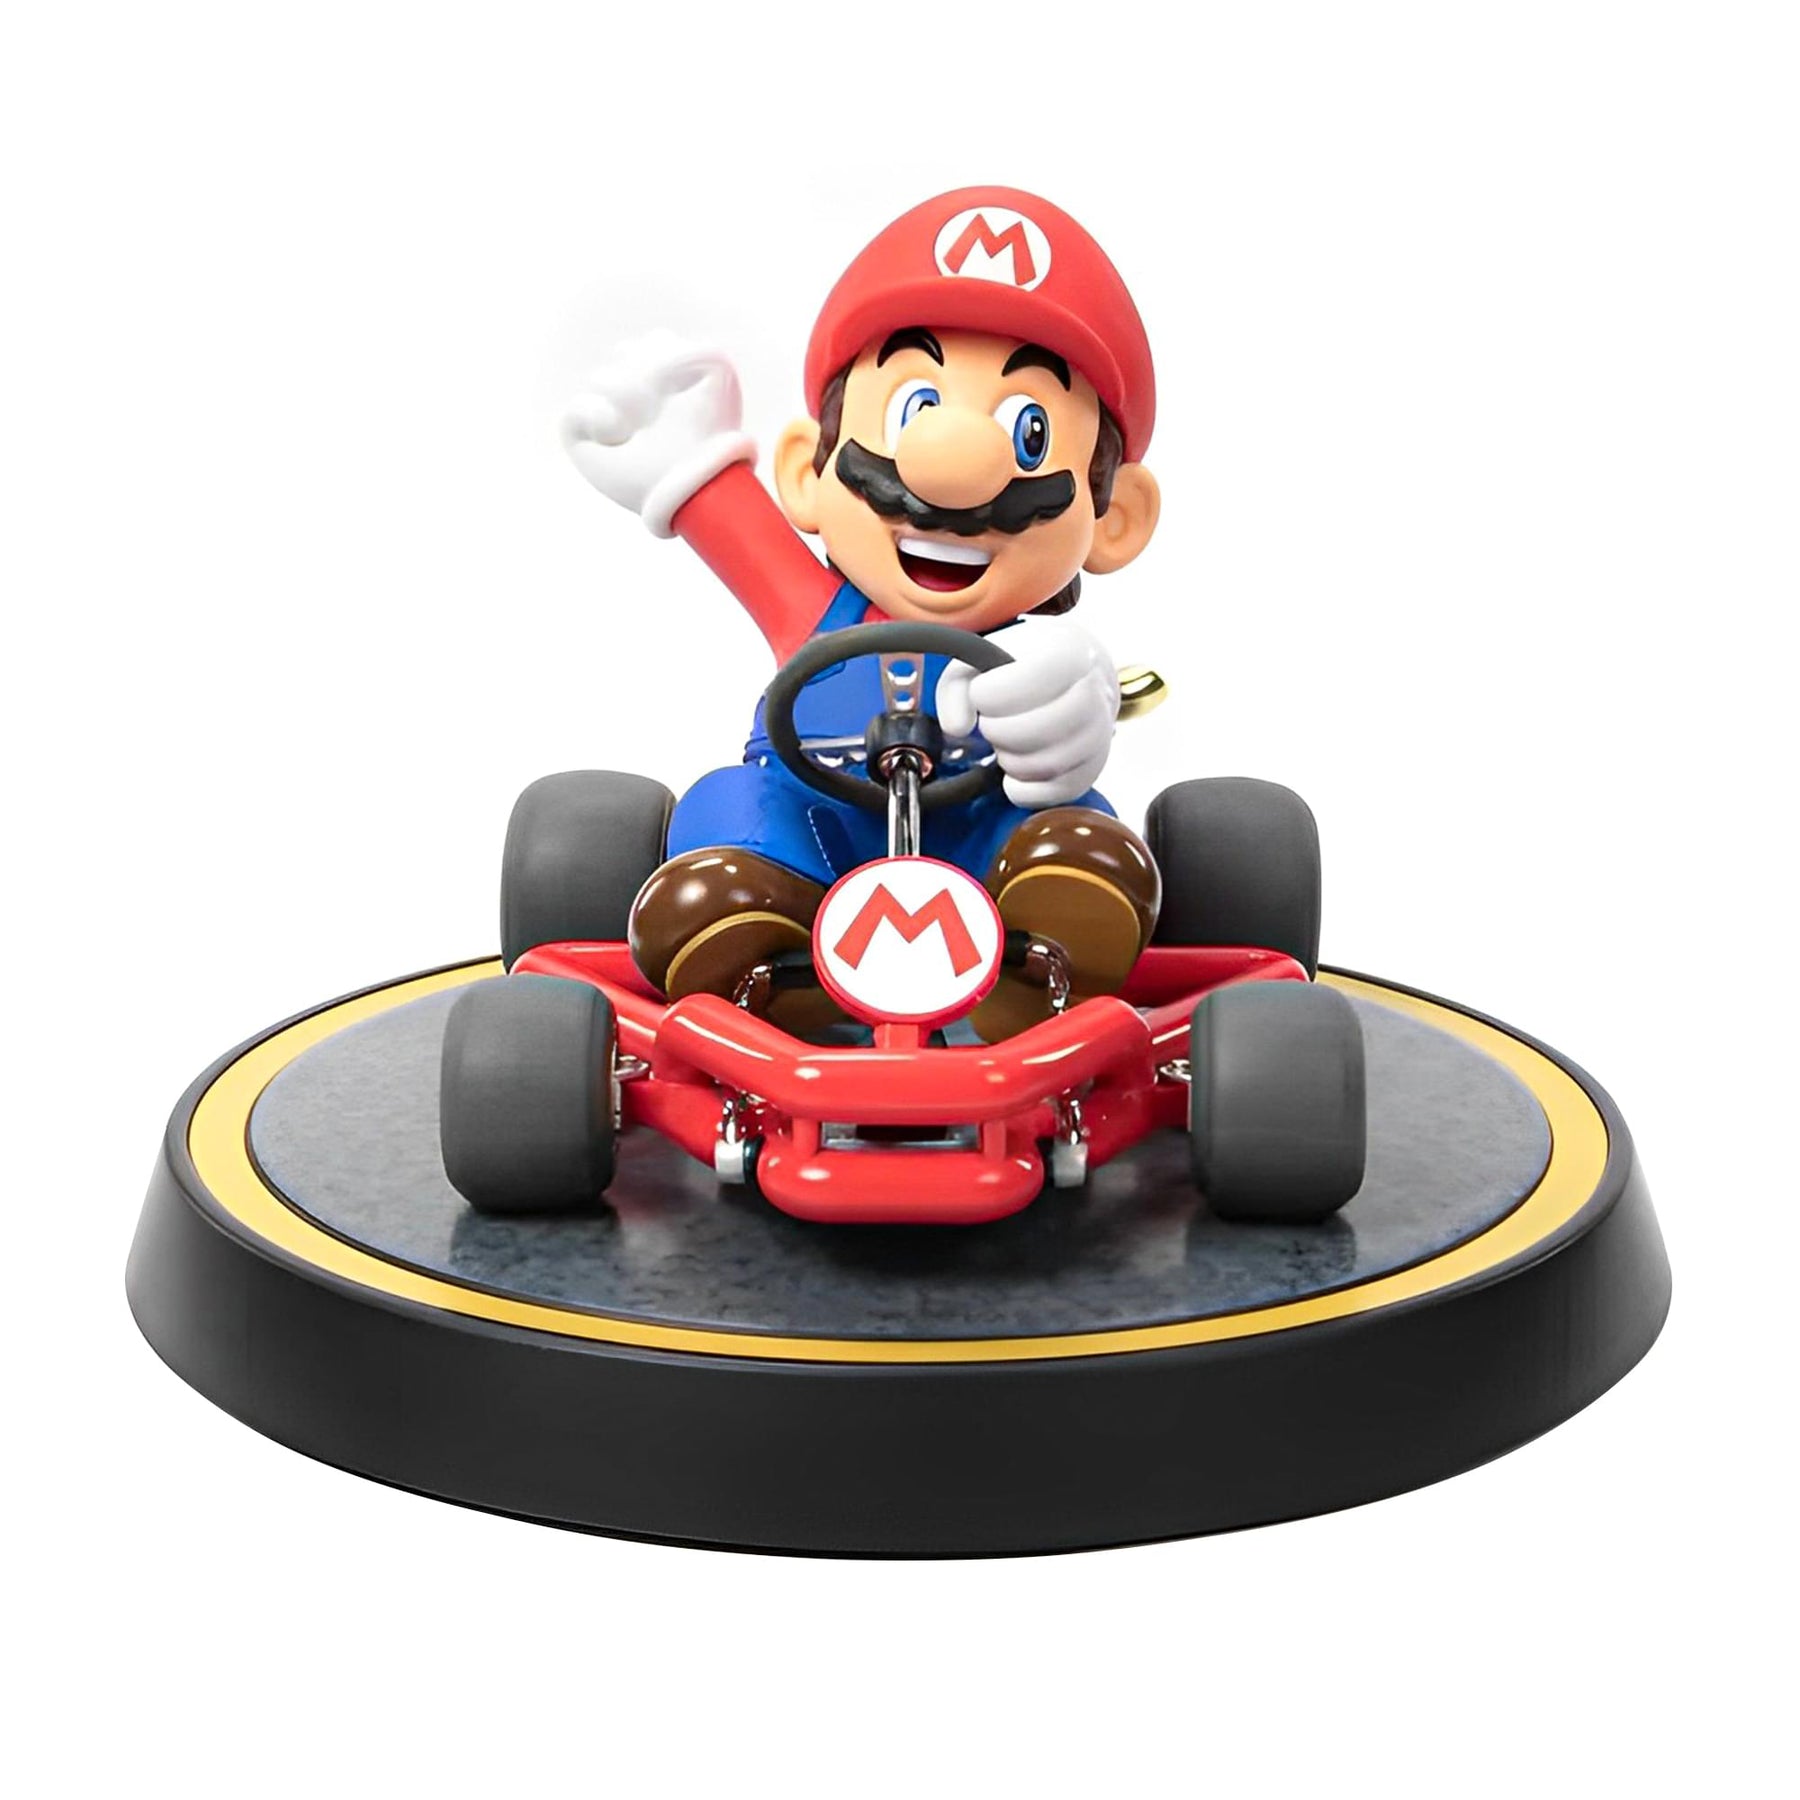 Mario Kart Standard Edition PVC Statue